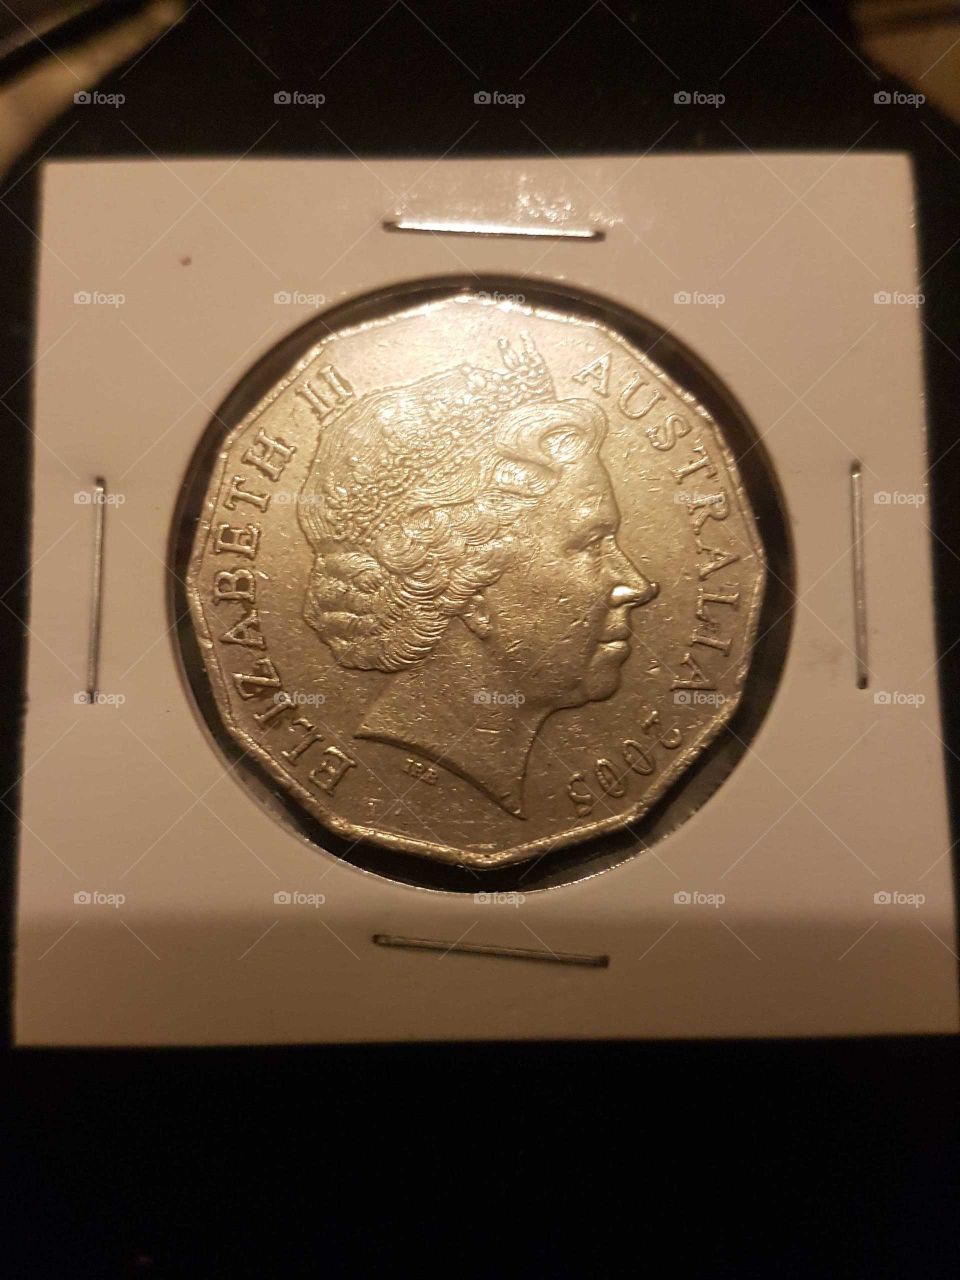 Australian 50 cent coin